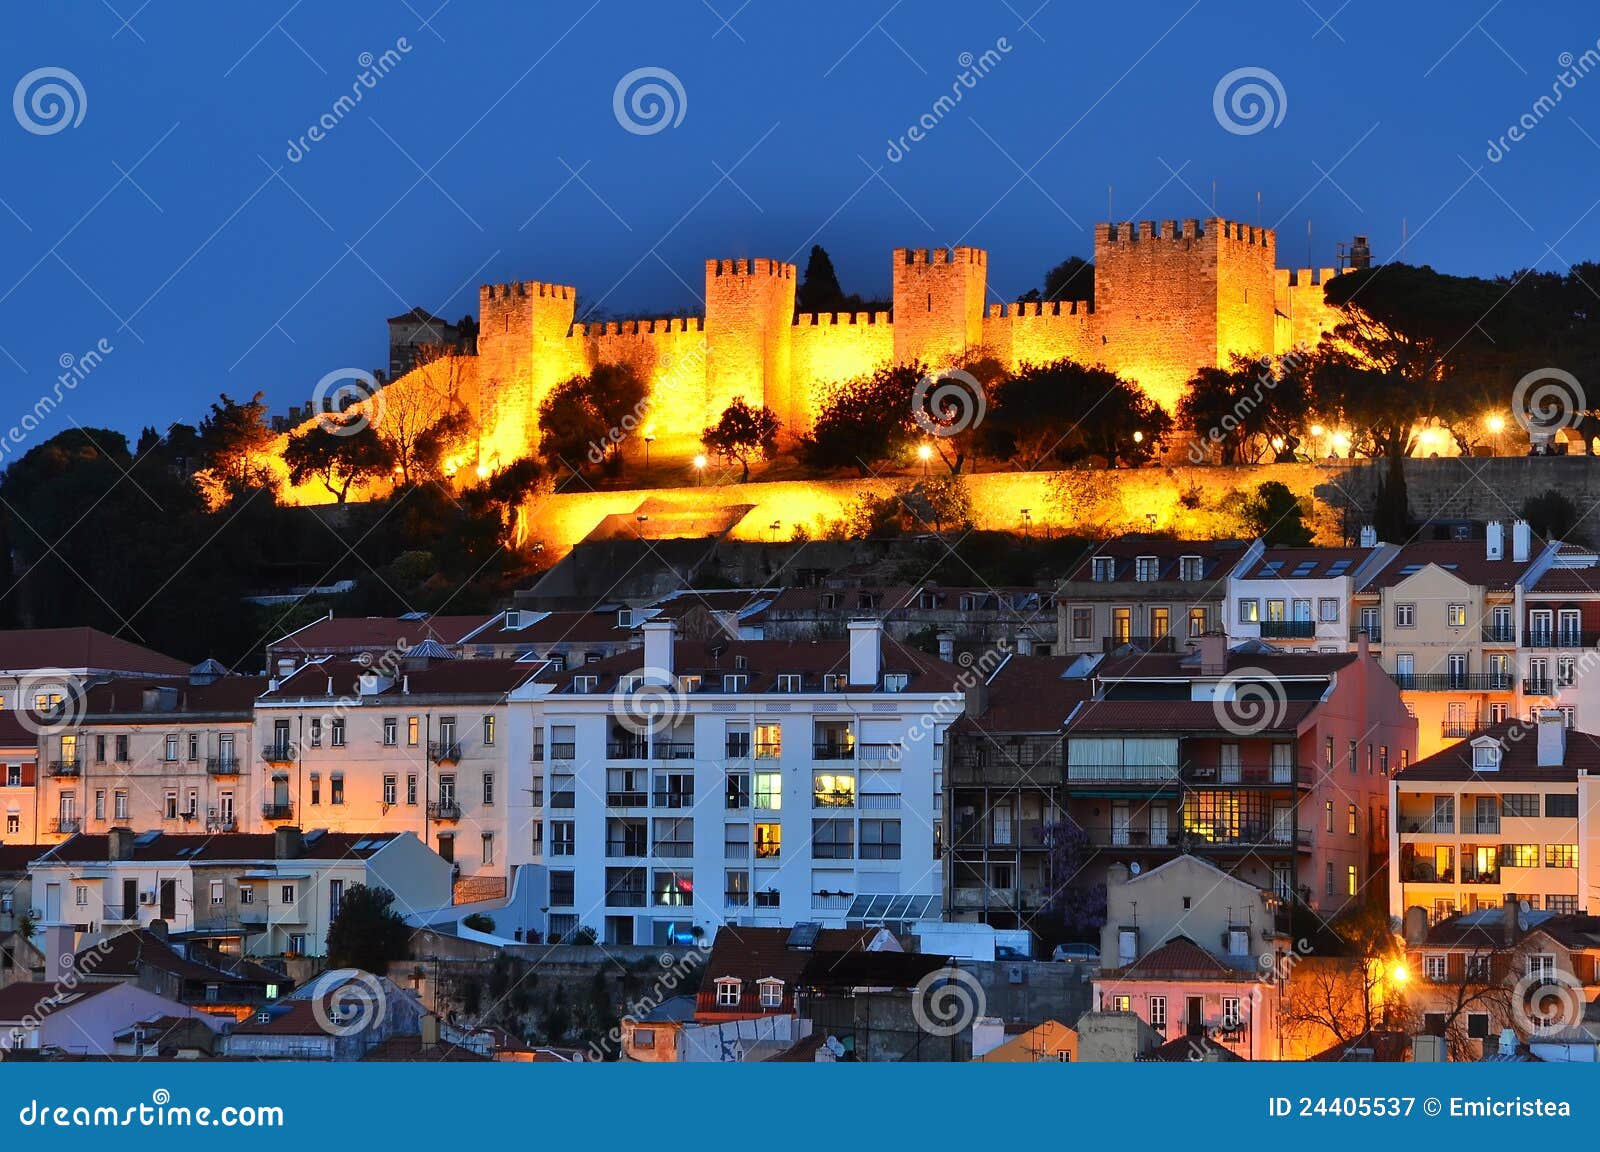 castle of sao jorge, lisbon night view